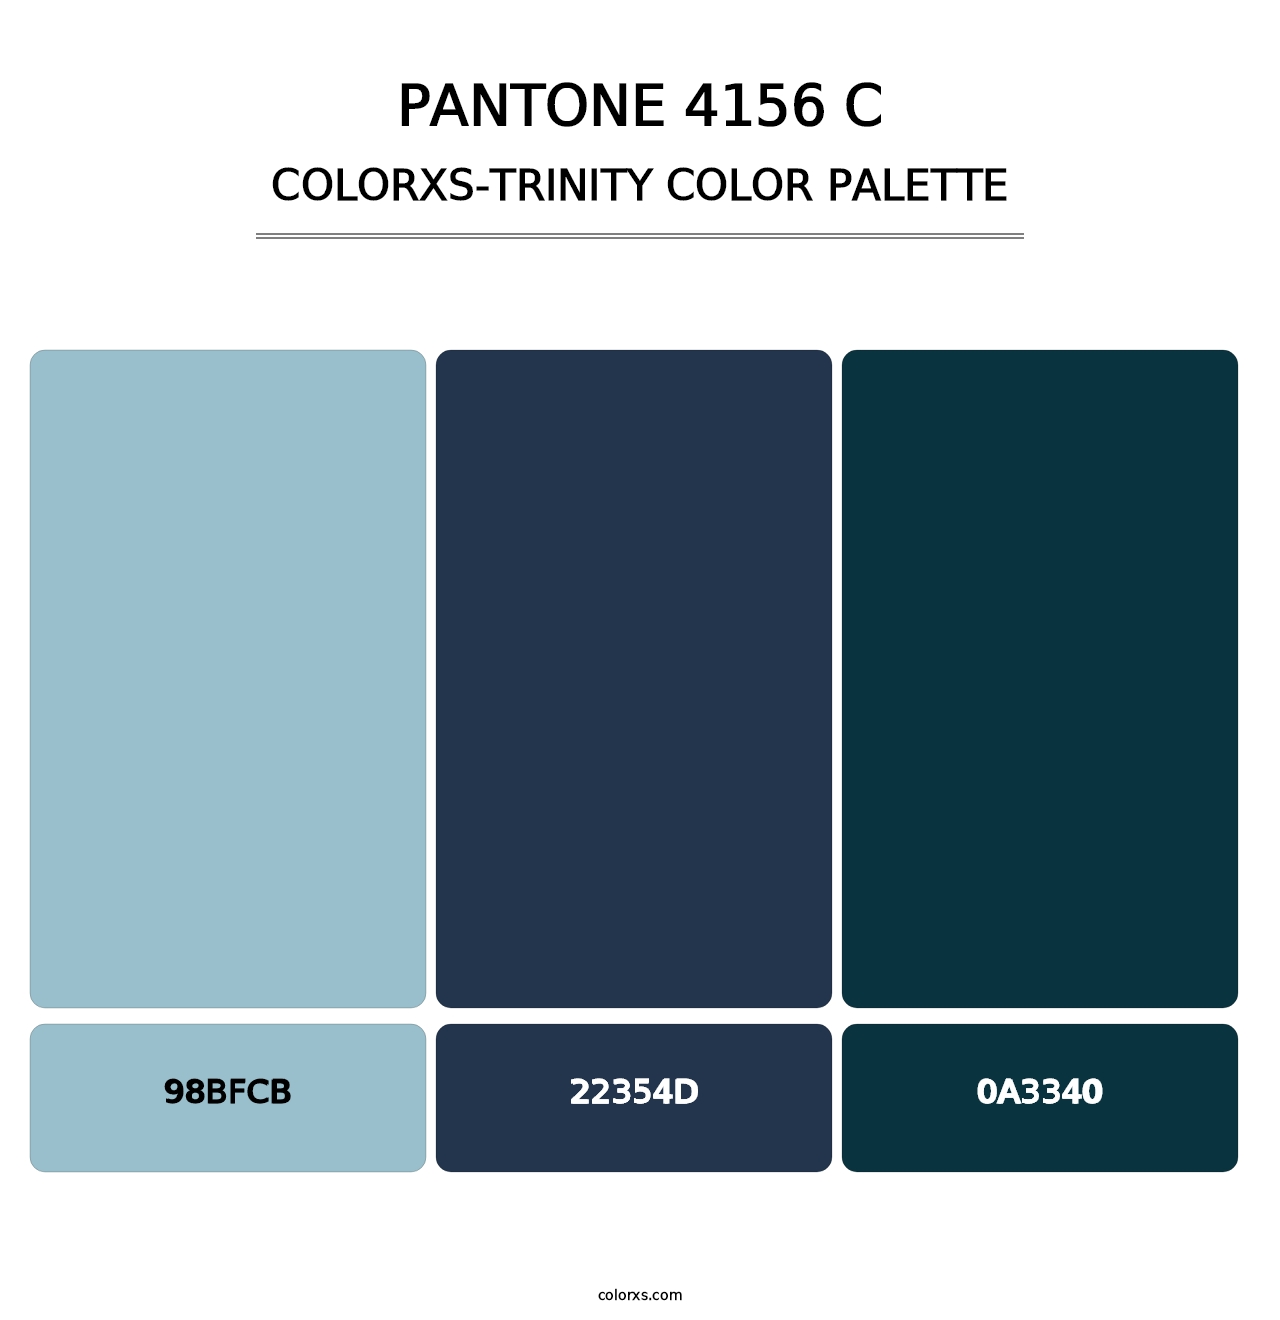 PANTONE 4156 C - Colorxs Trinity Palette